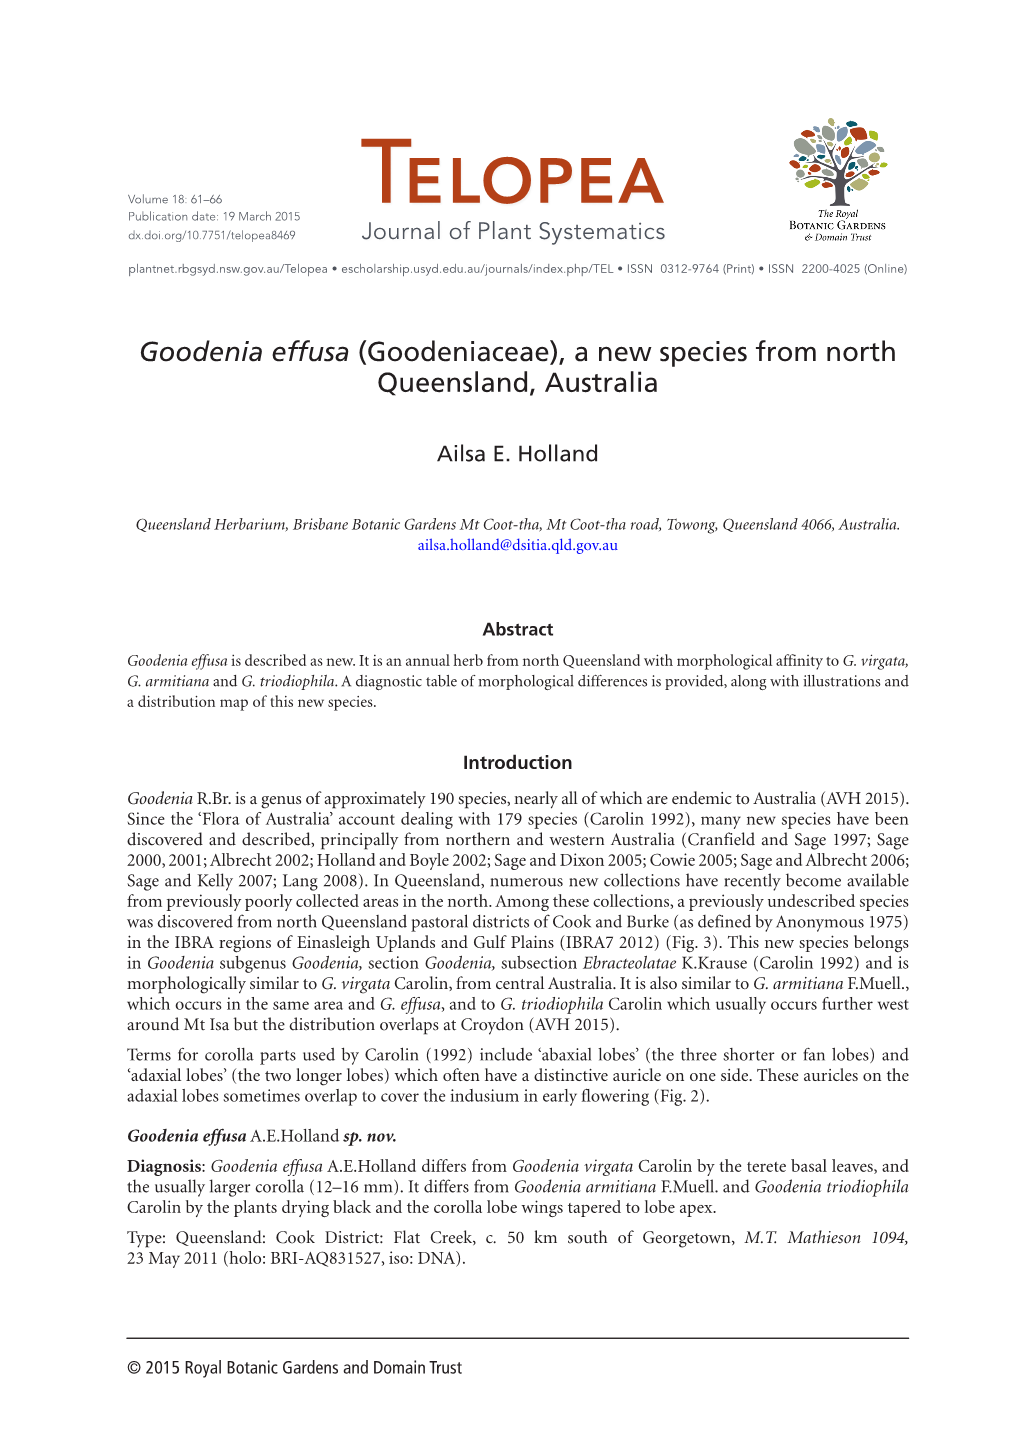 Goodenia Effusa (Goodeniaceae), a New Species from North Queensland, Australia